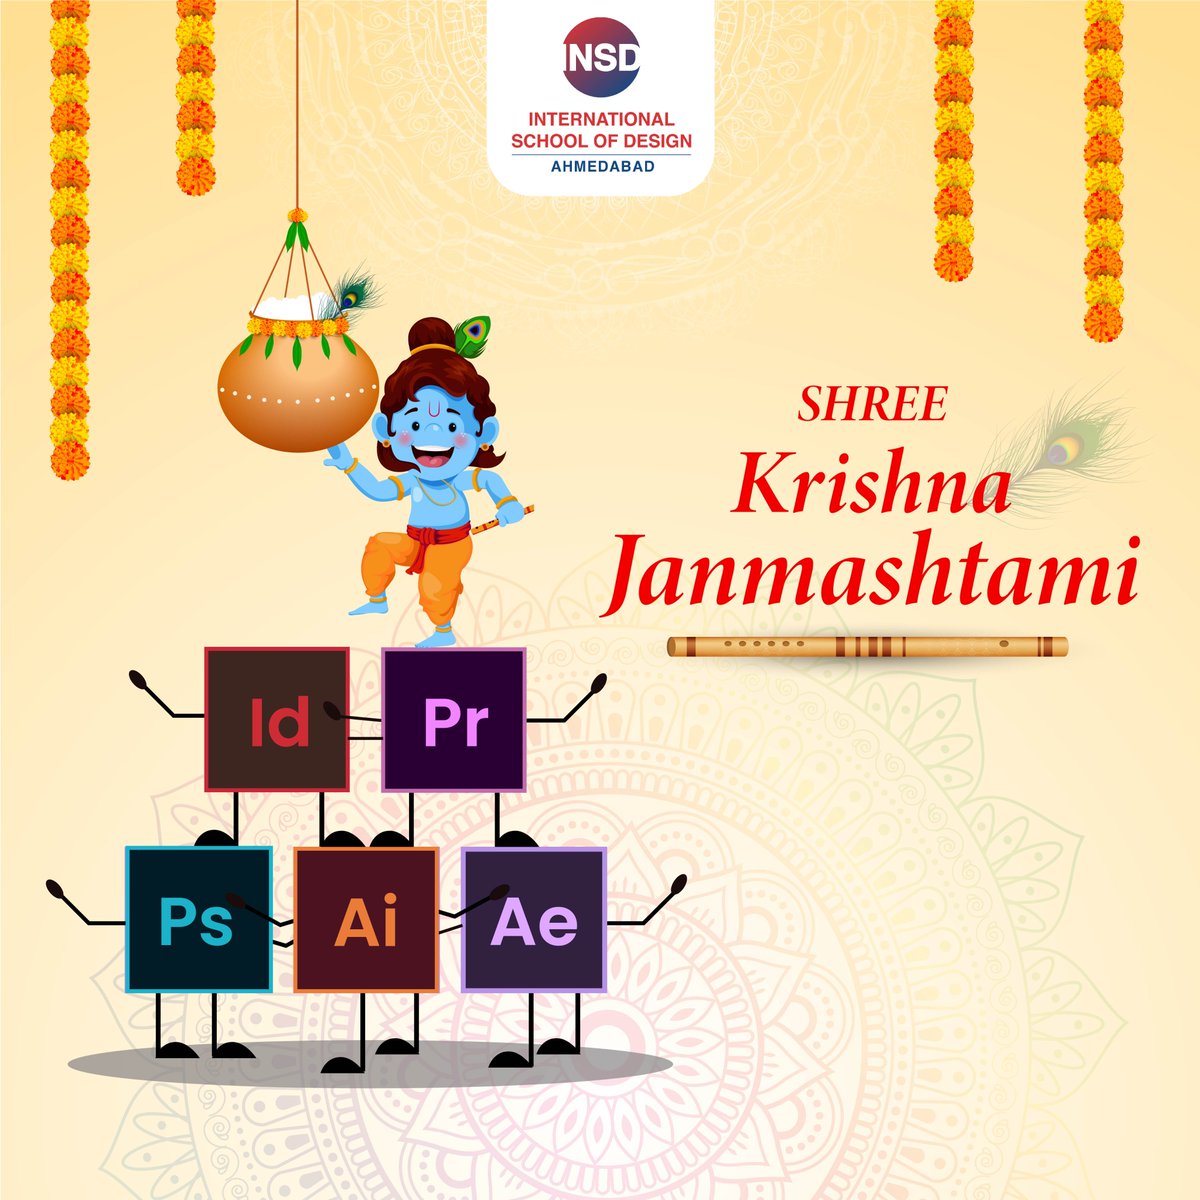 May the spirit of Lord Krishna inspire us to design a world full of beauty and purpose. Happy Janmashtami!

#JanmashtamiVibes #DesignInspirations